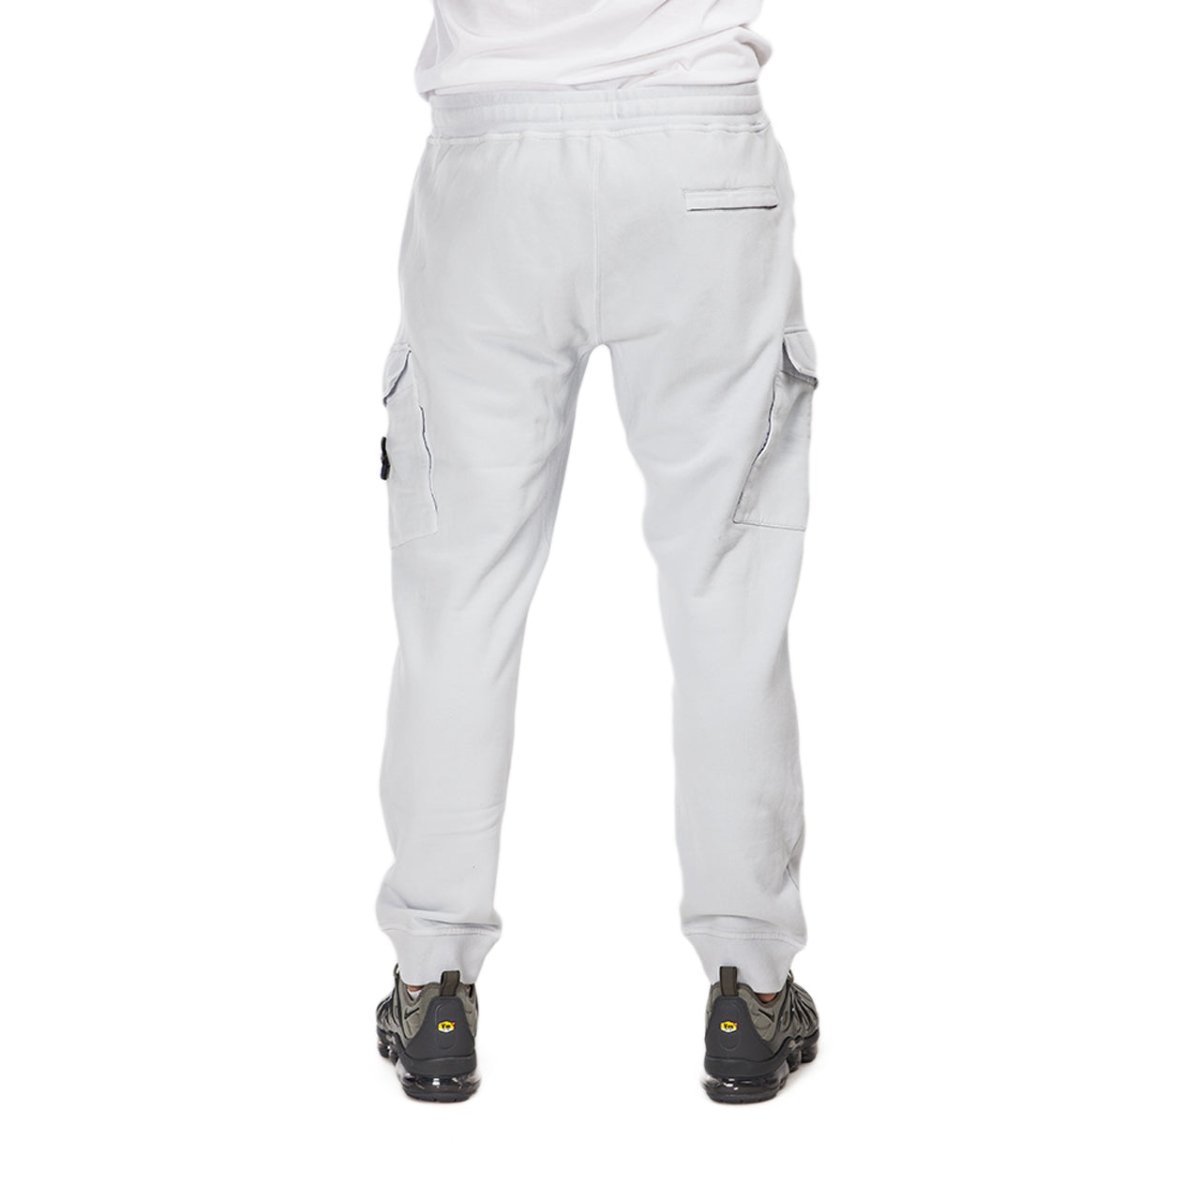 Stone Island Fleece Pants (Weiß)  - Allike Store